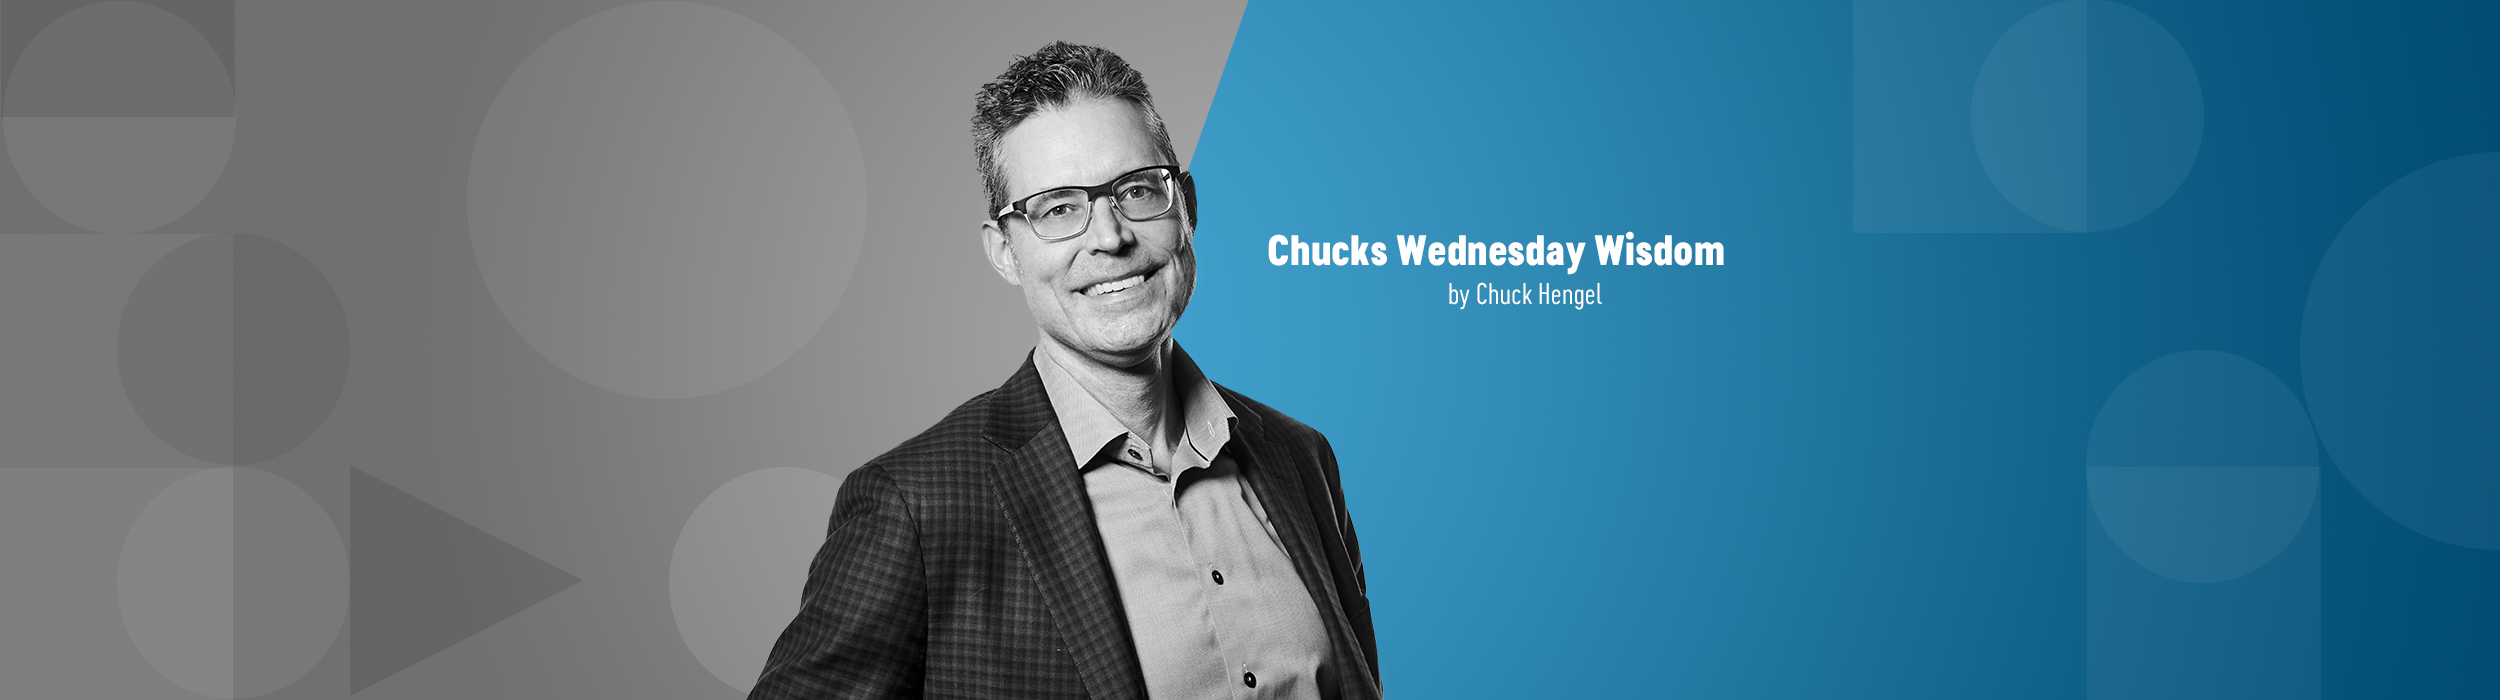 Chuck's Wednesday Wisdom: data analysis collaboration